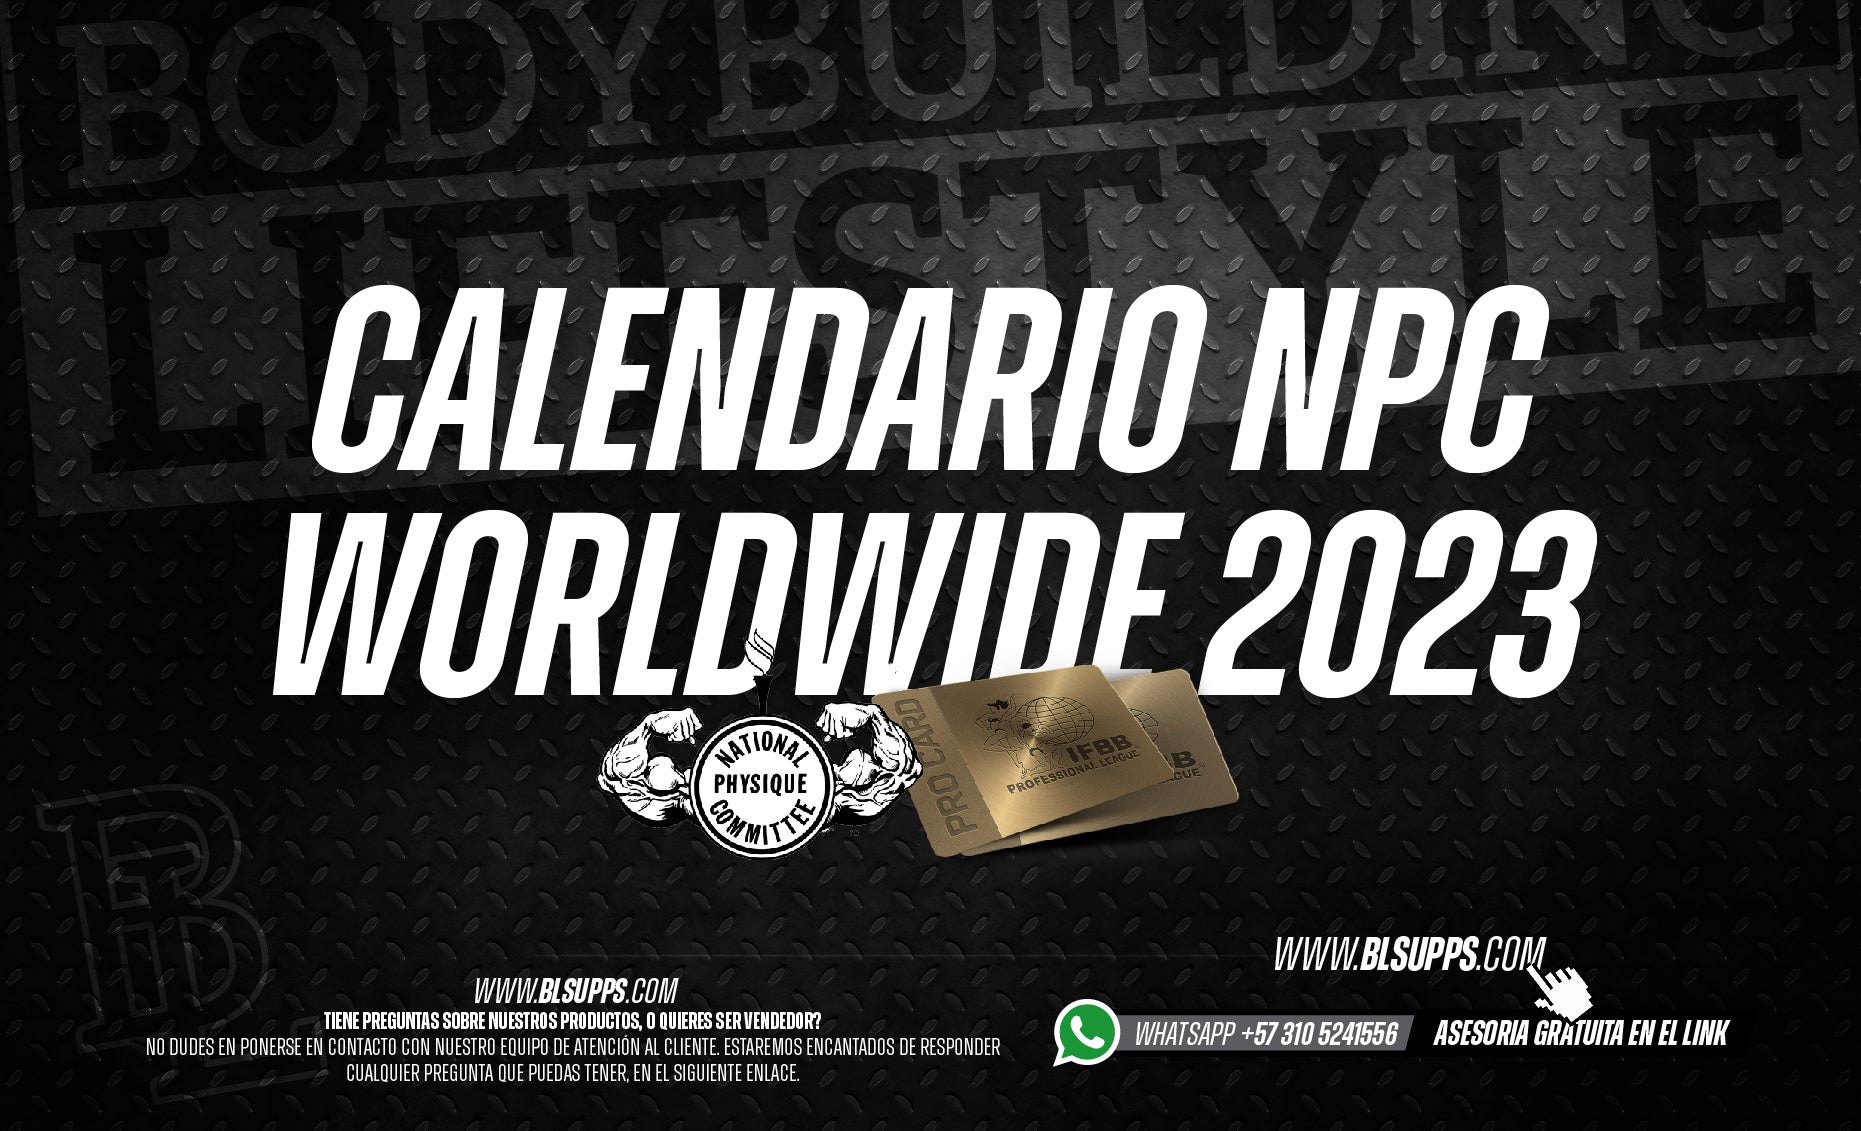 Calendario NPC Worldwide 2023